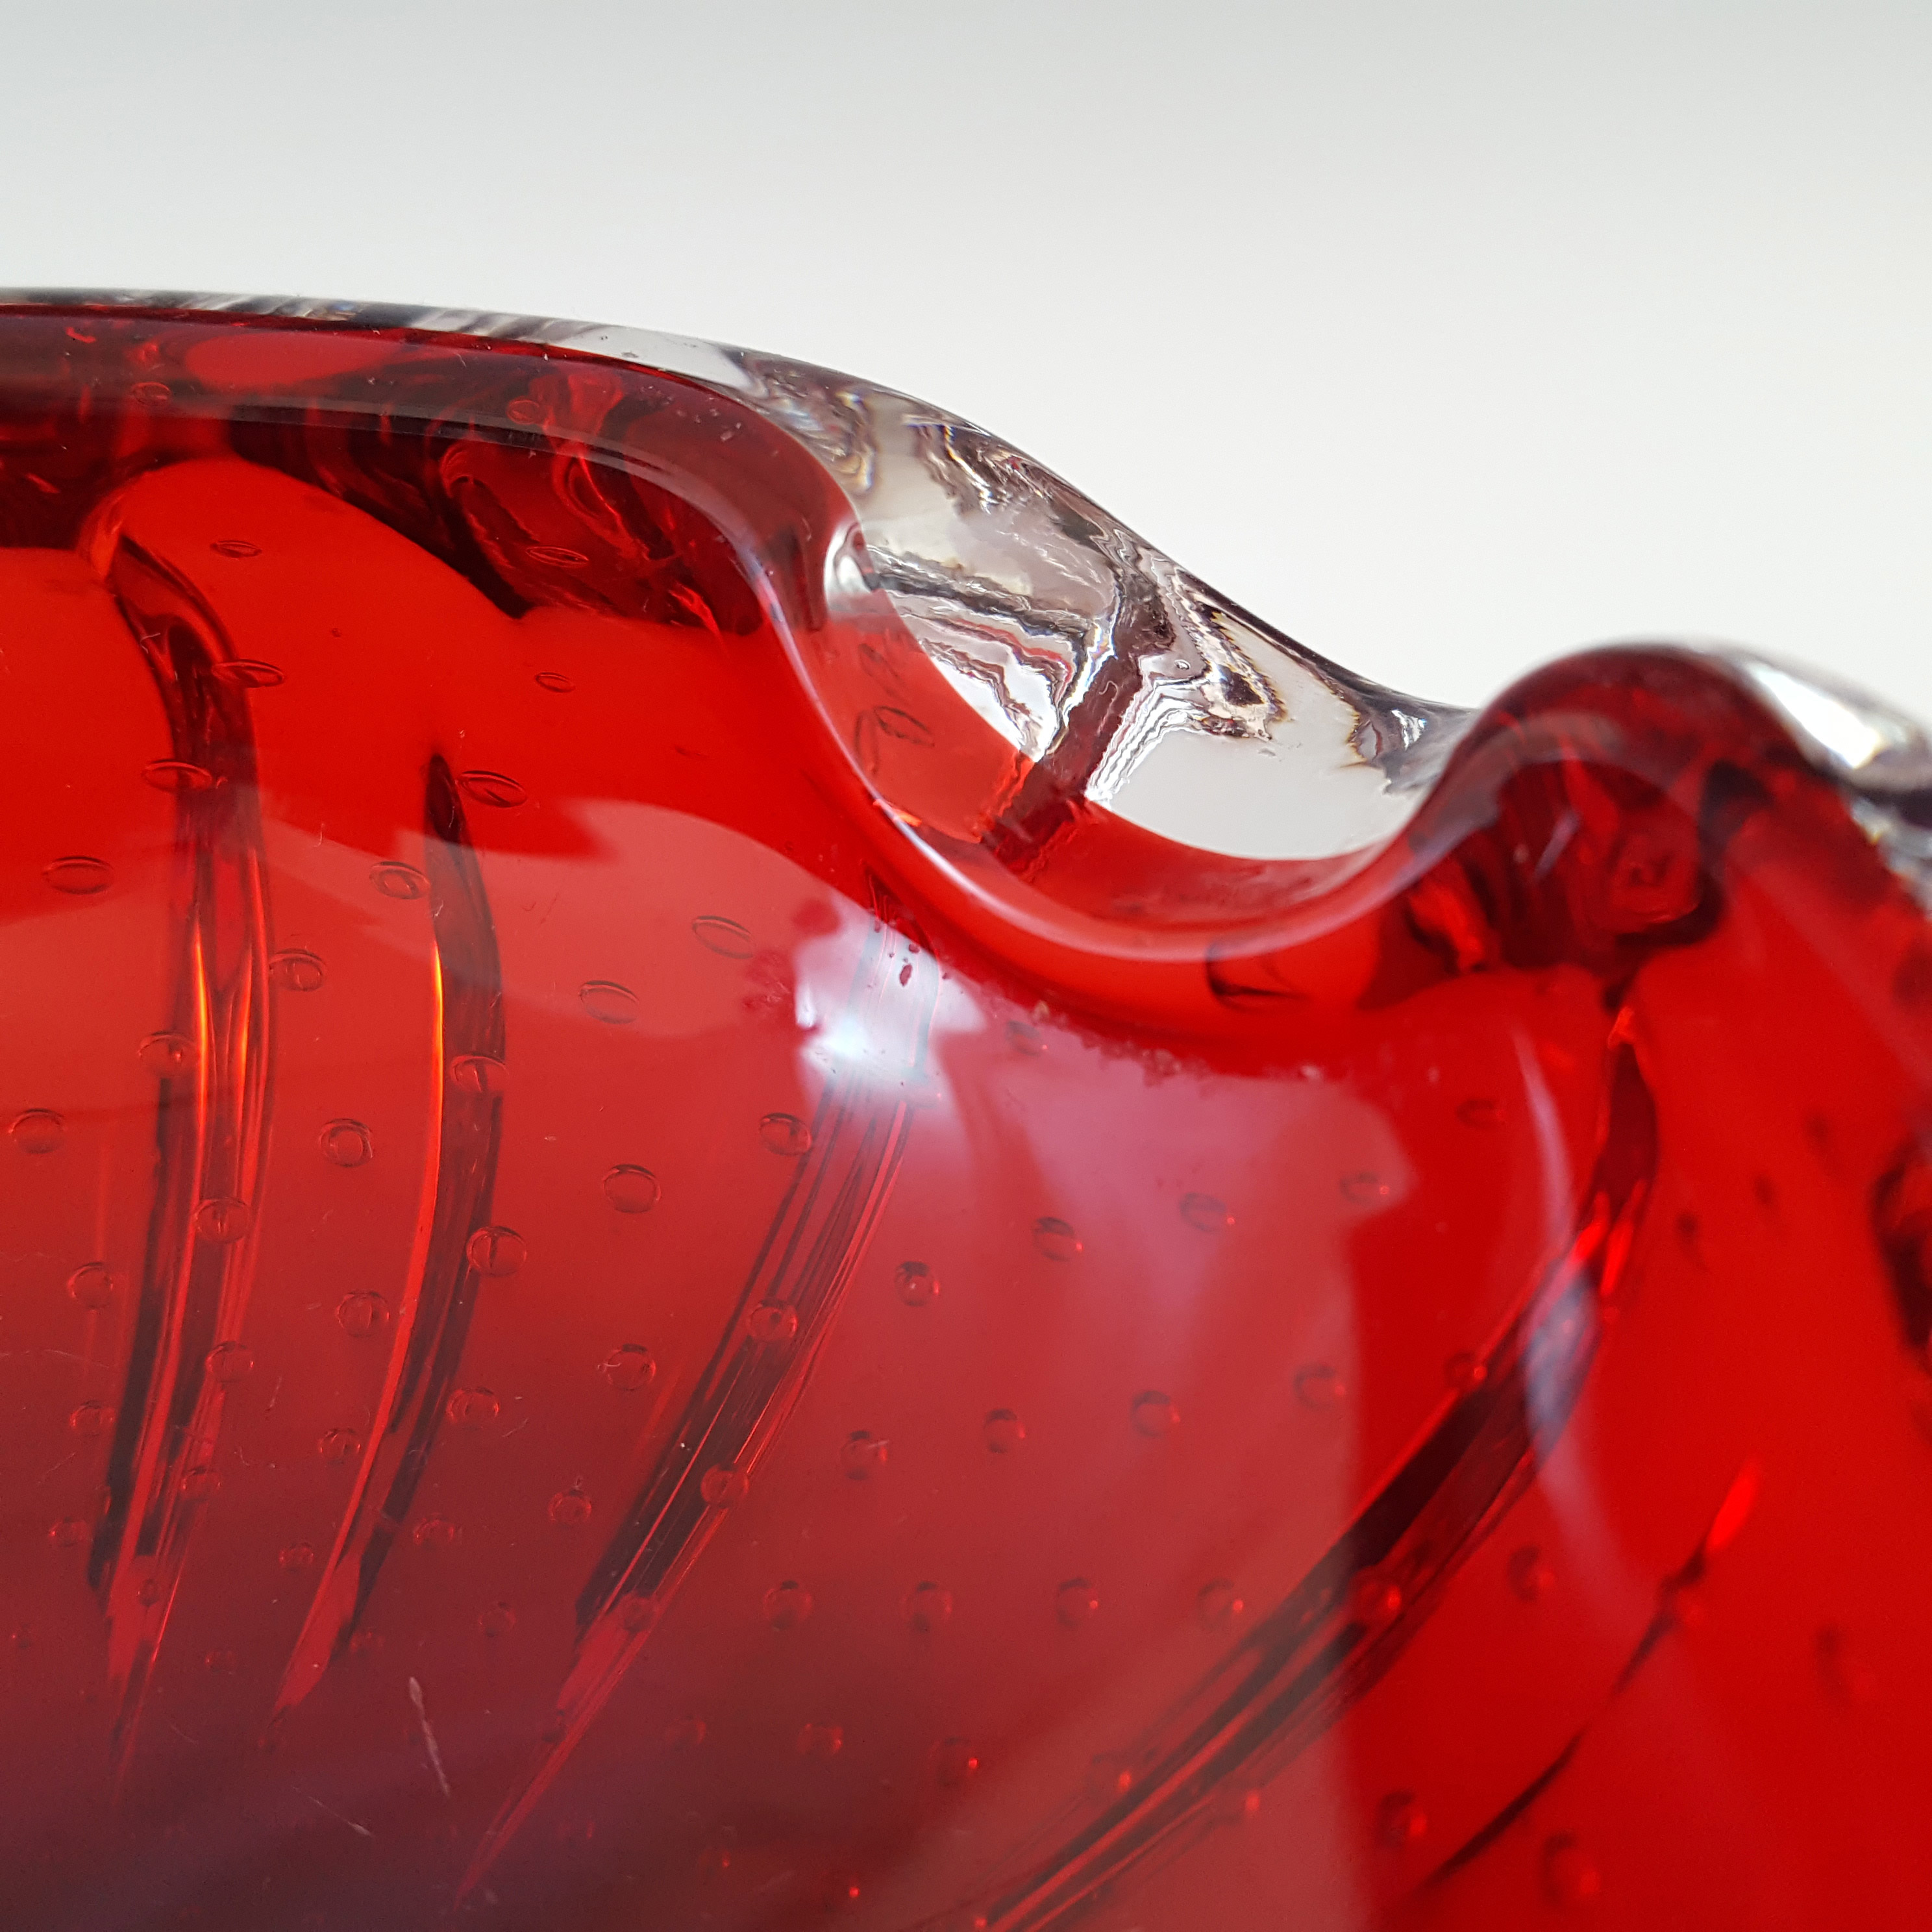 Aseda #667 Swedish Vintage Red Glass Bubble Ashtray Bowl - Click Image to Close